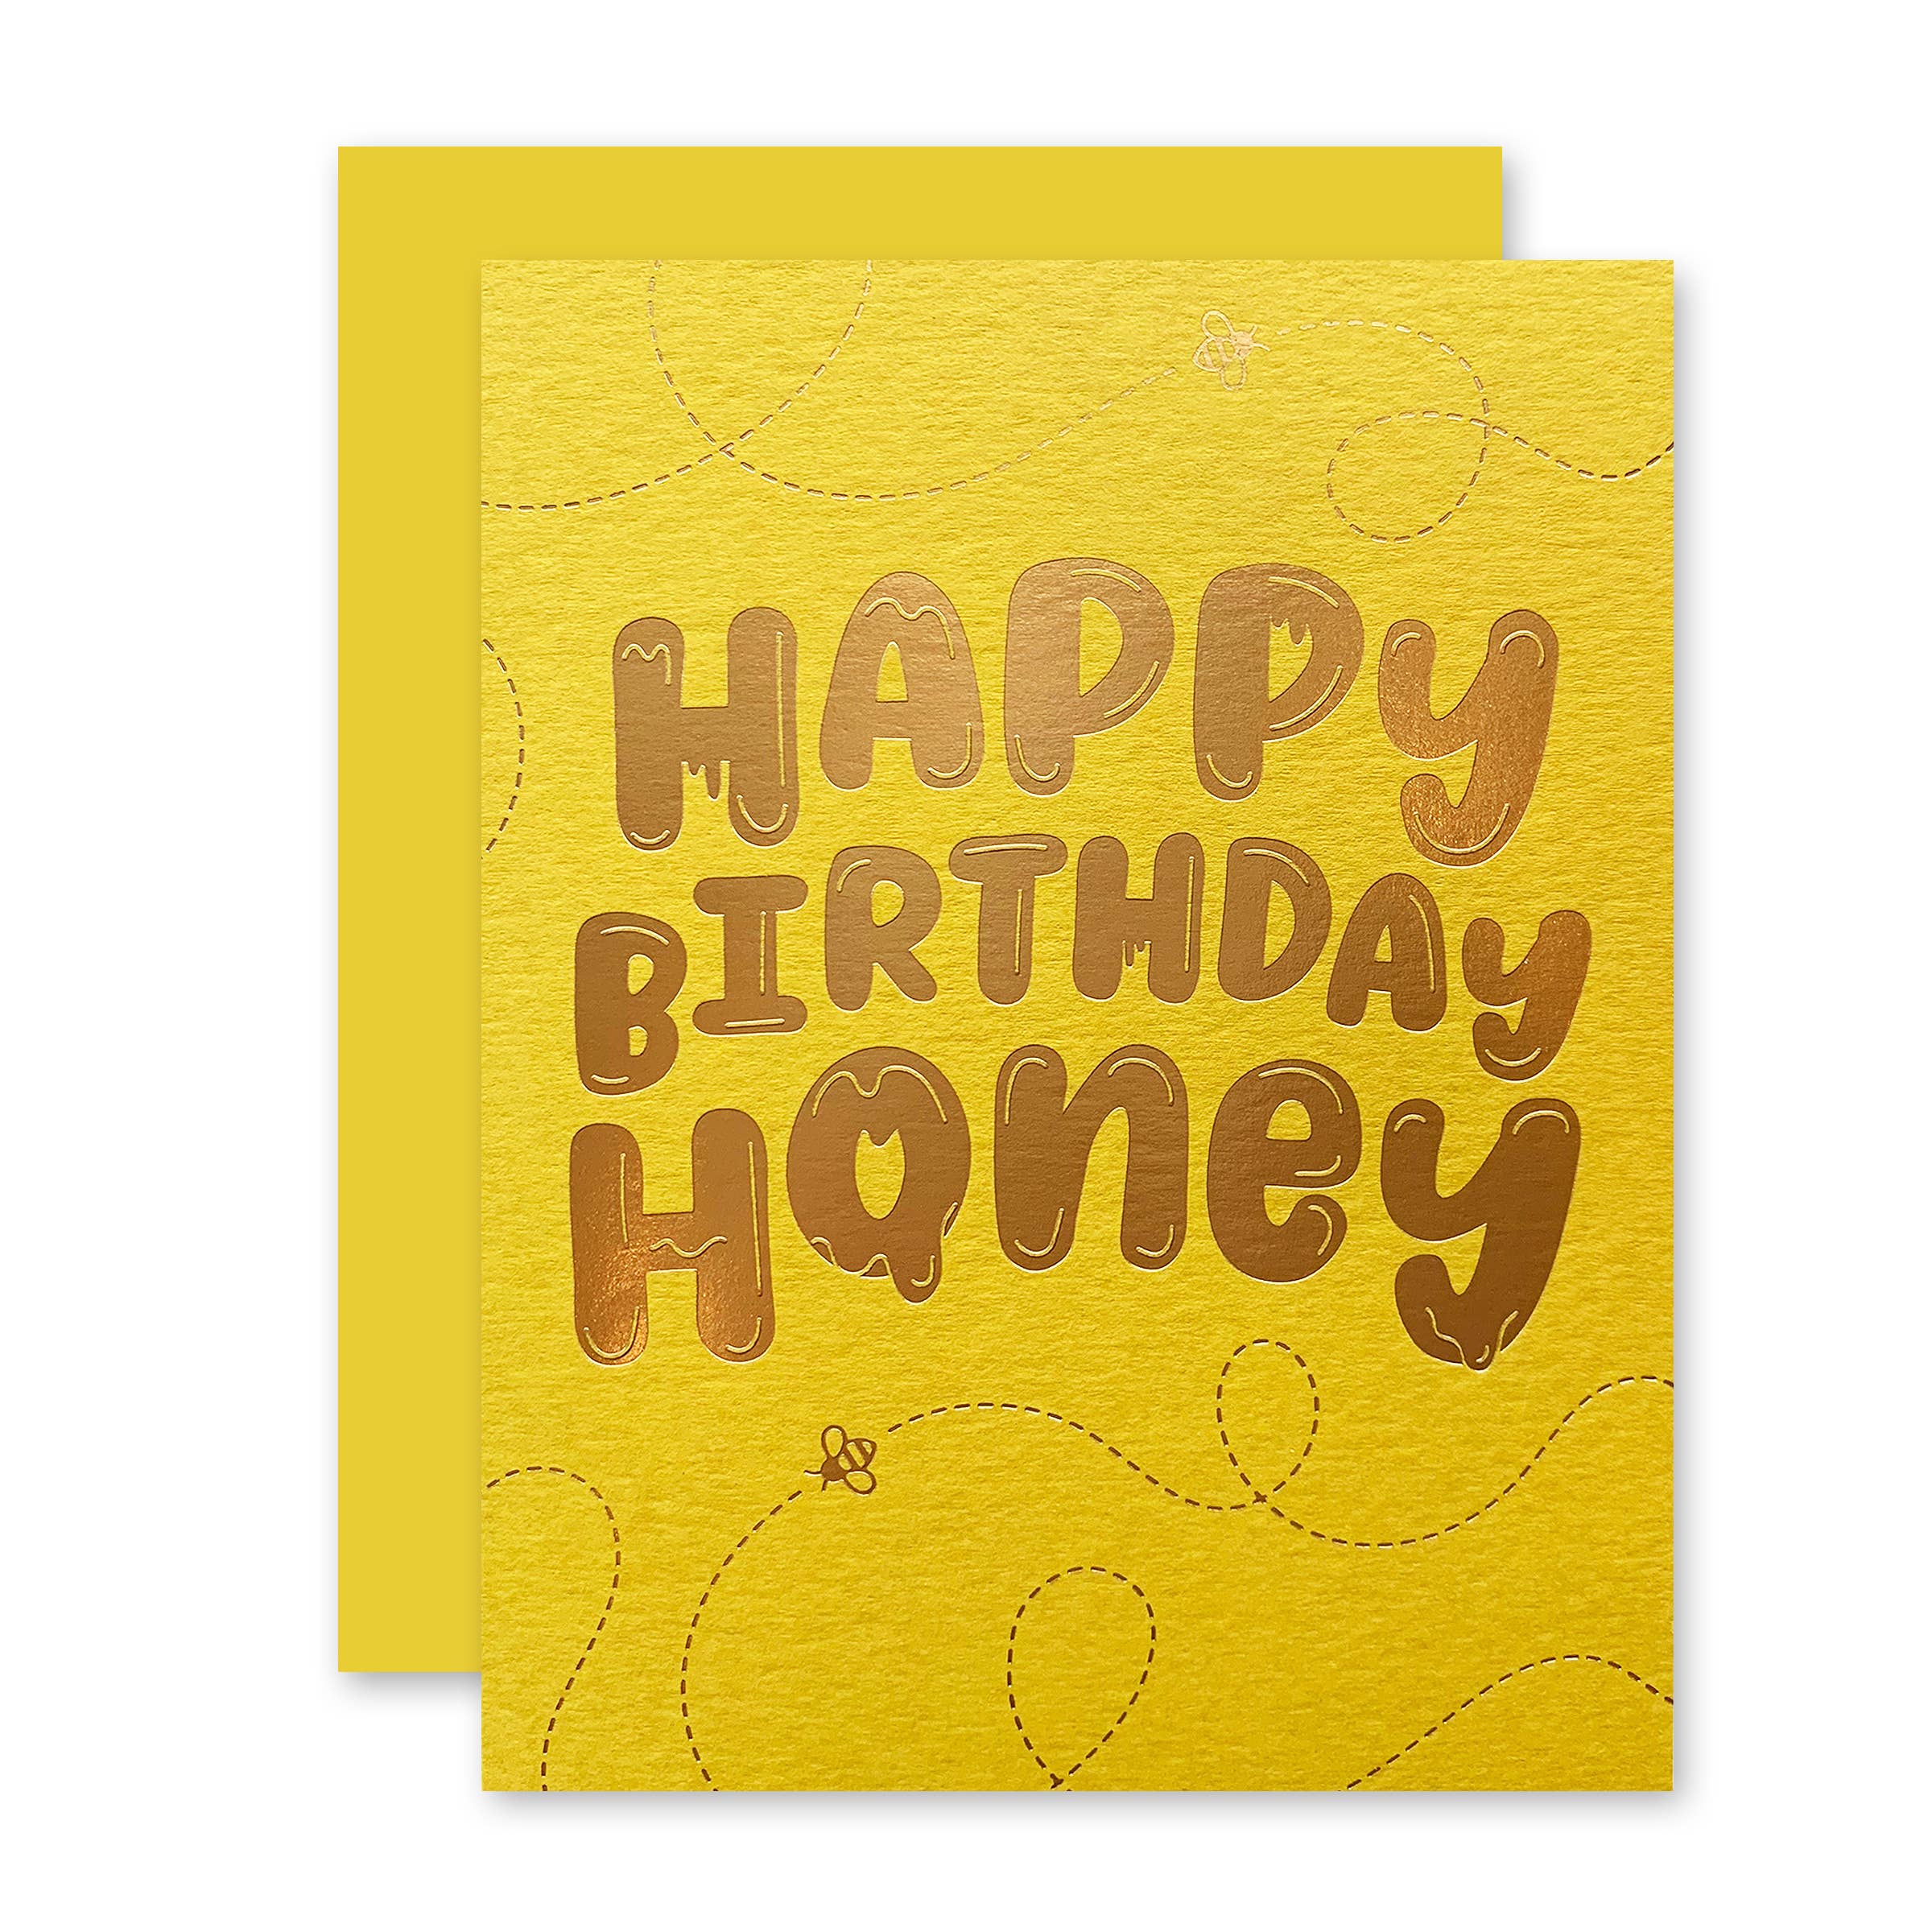 Happy Birthday Honey Card